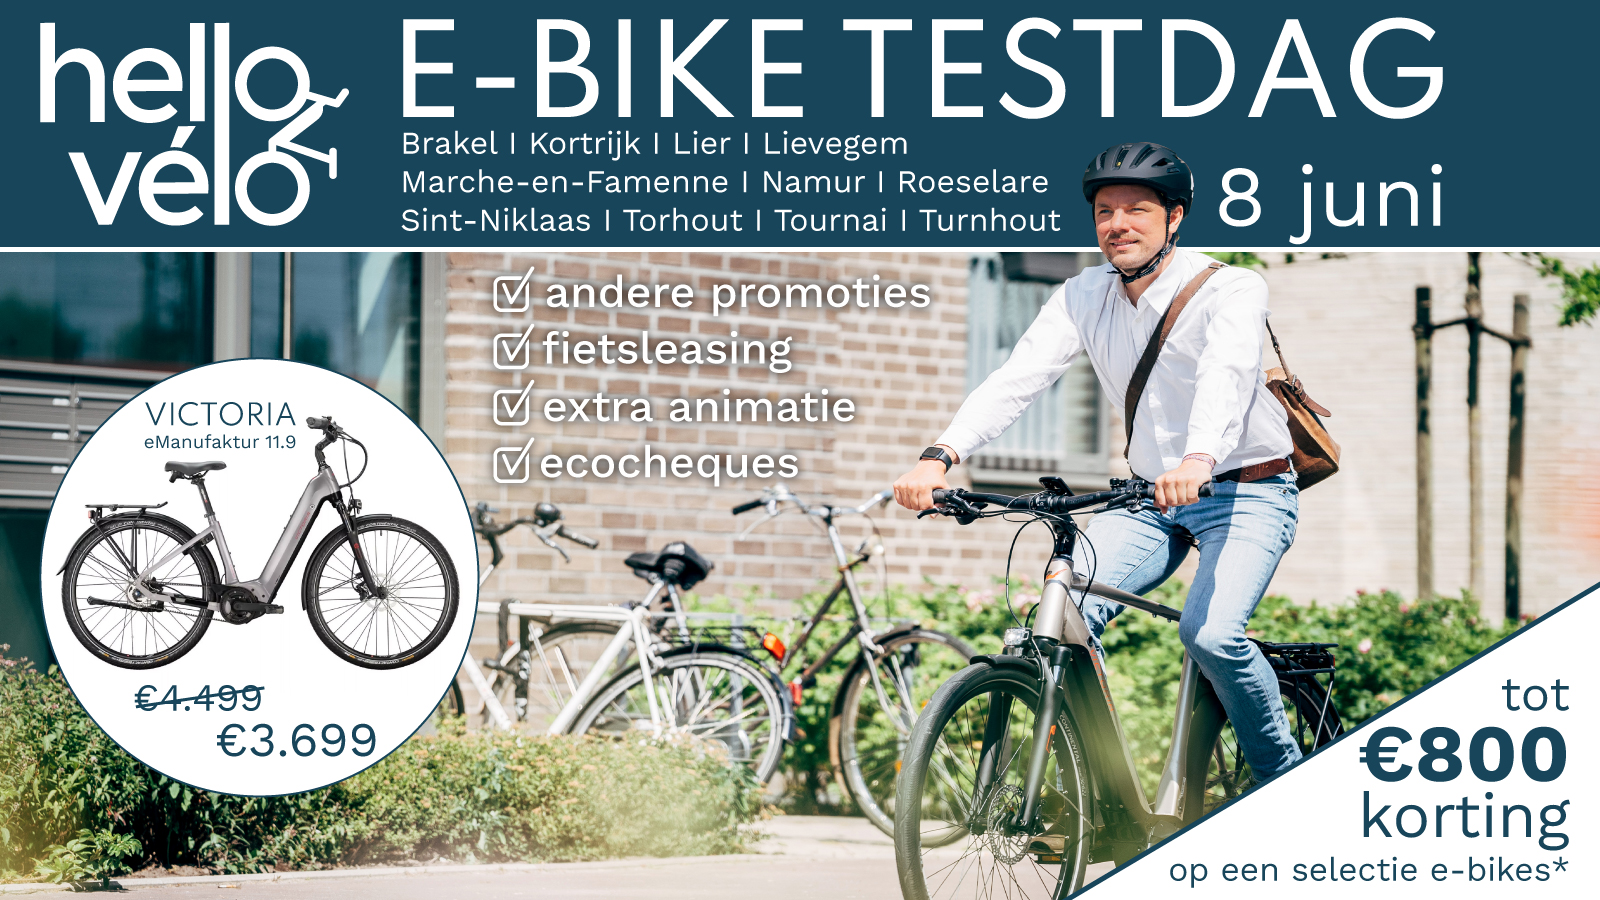 E-bike testdag - vind de ideale elektrische fiets